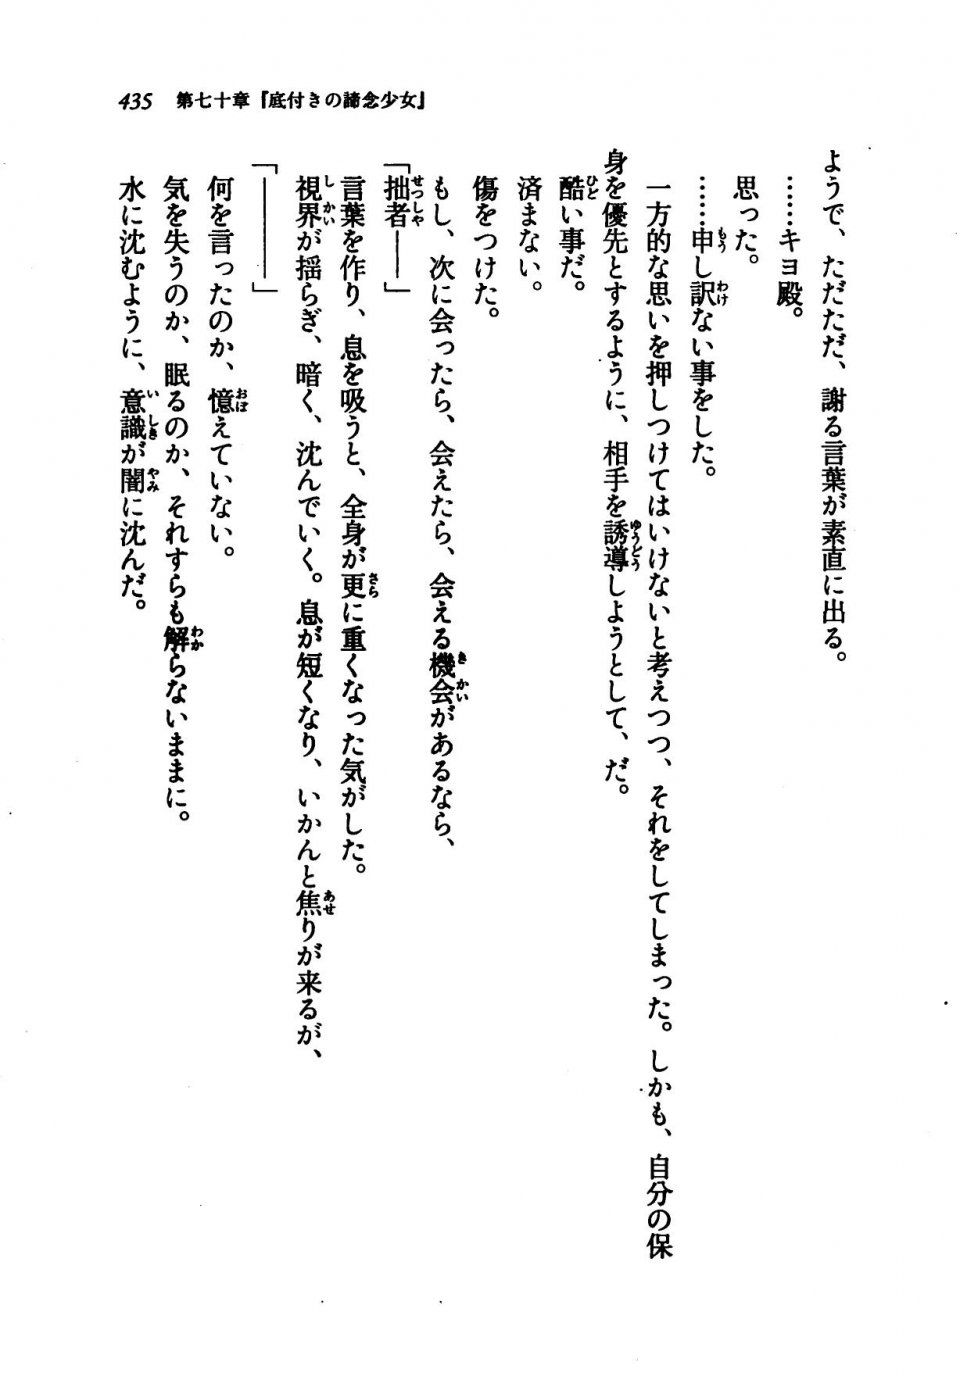 Kyoukai Senjou no Horizon LN Vol 21(8C) Part 1 - Photo #434